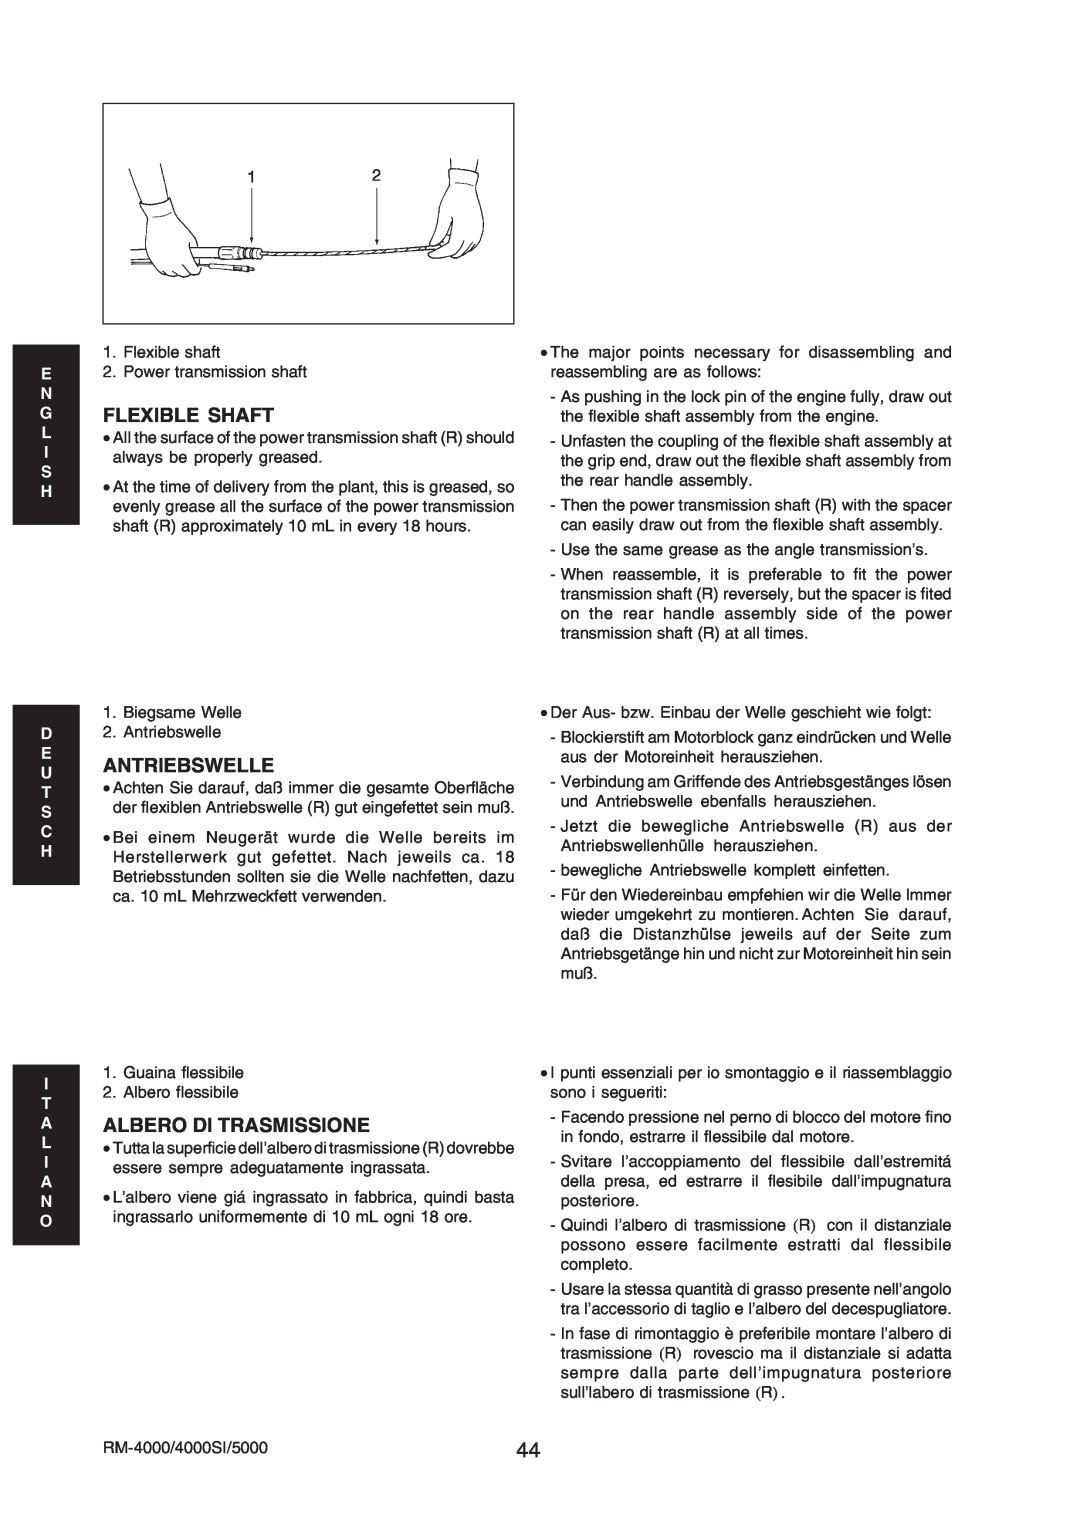 Echo RM-5000, RM-4000SI manual Gflexible Shaft, U Antriebswelle, Aalbero Di Trasmissione 